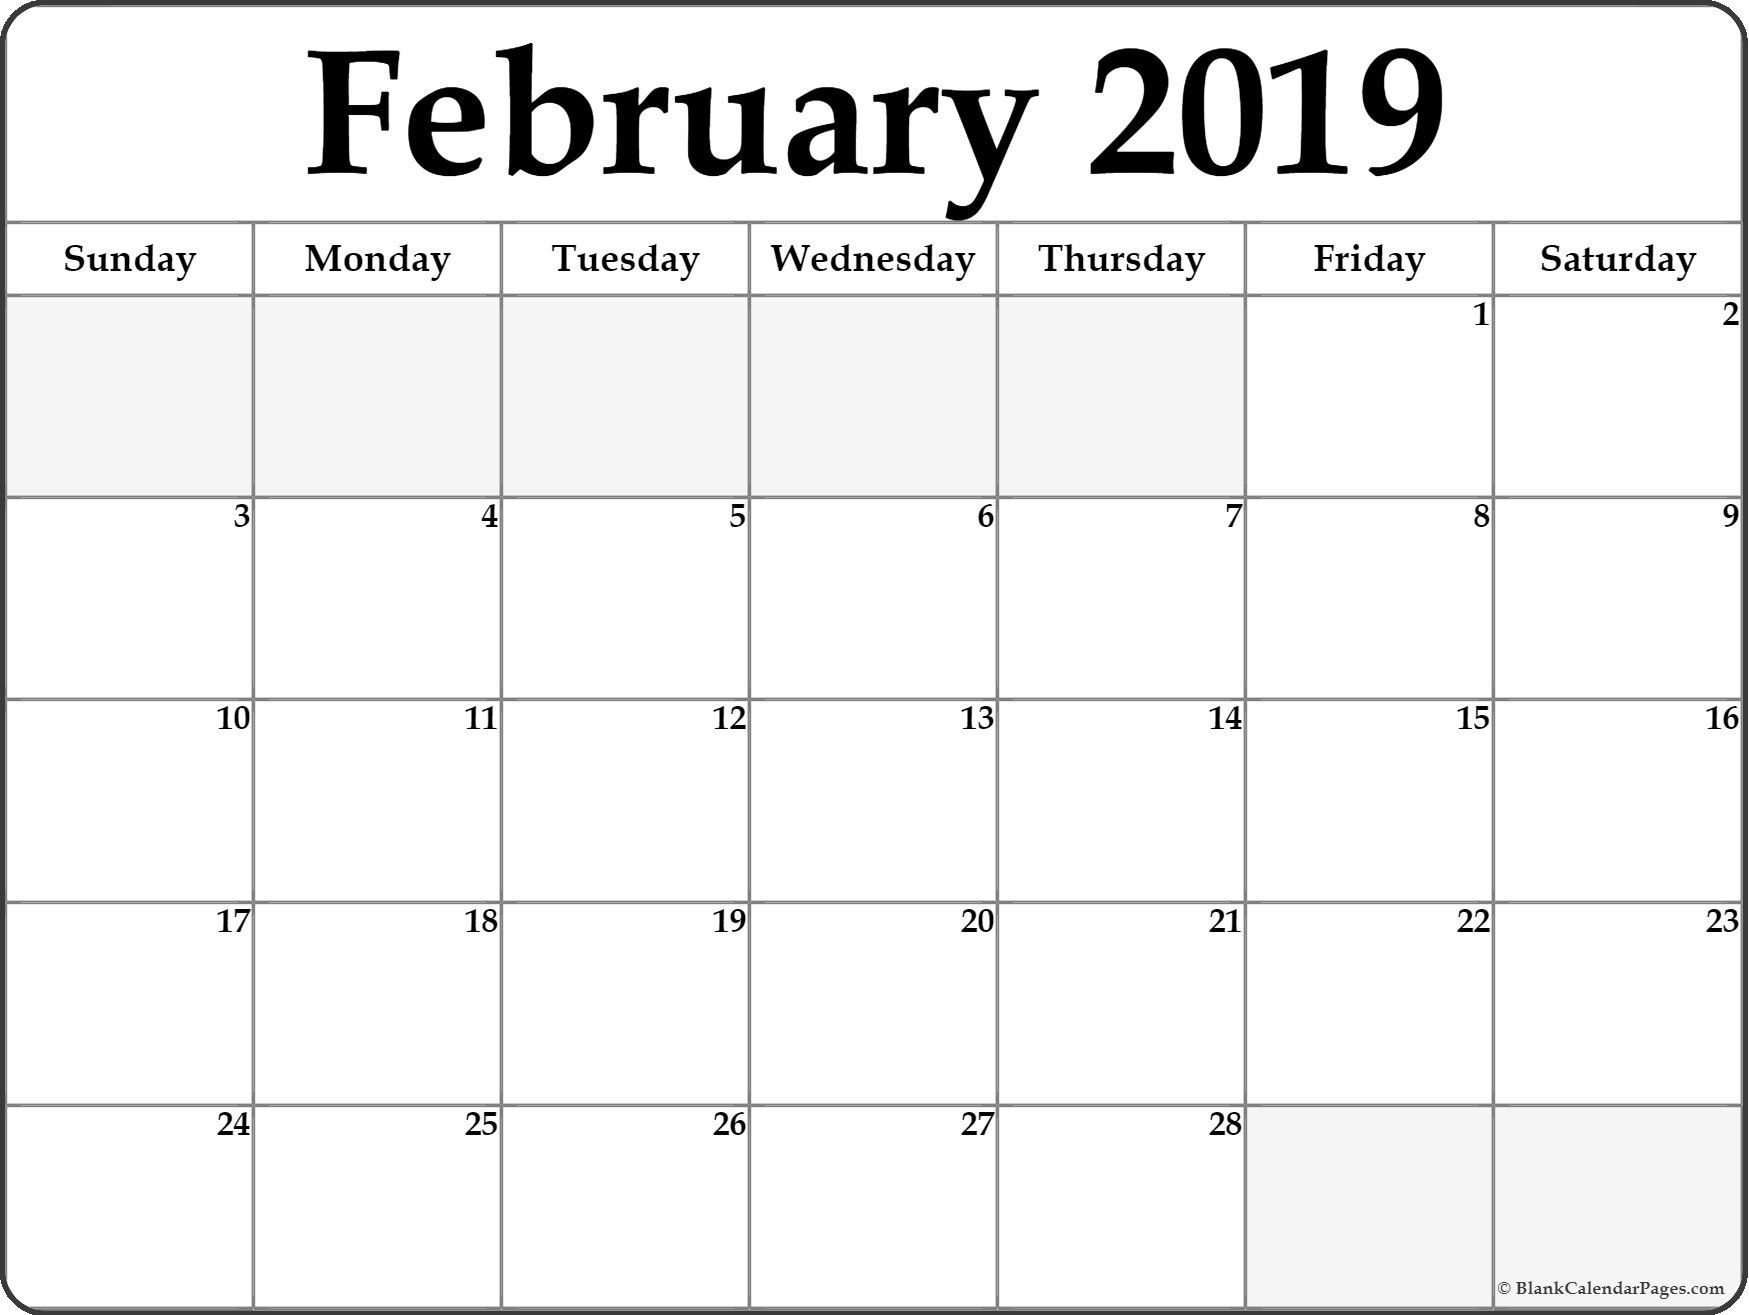 February 2019 Editable Calendar | Free February 2019 Calendar for Monthly Calendar Templates Portrait Editable